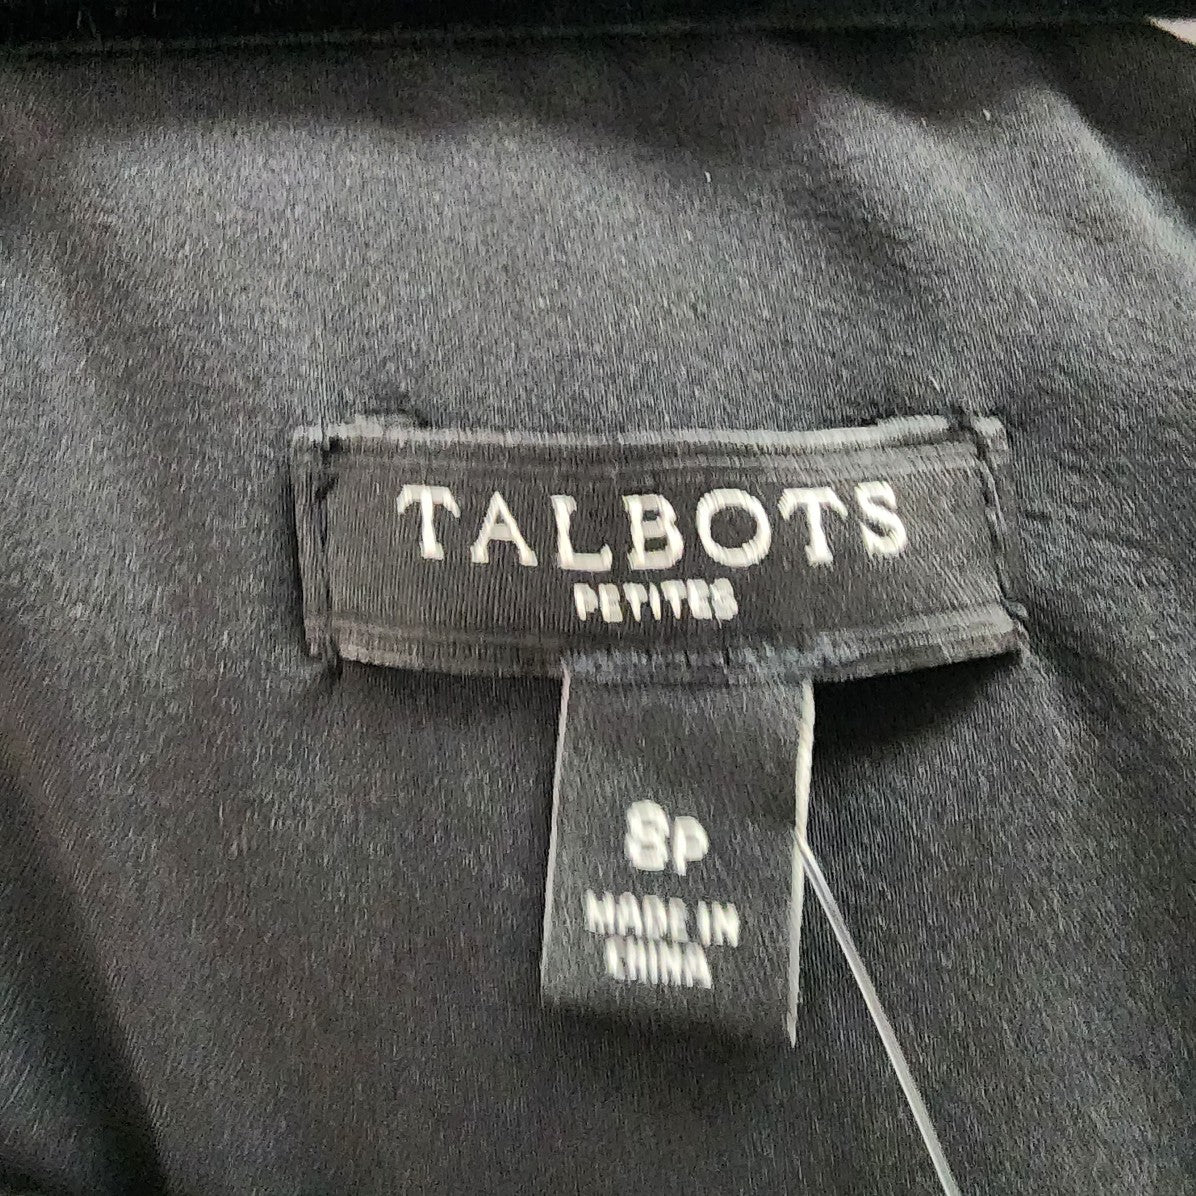 Talbots Petites Black Floral Fit & Flare Dress Size 8p